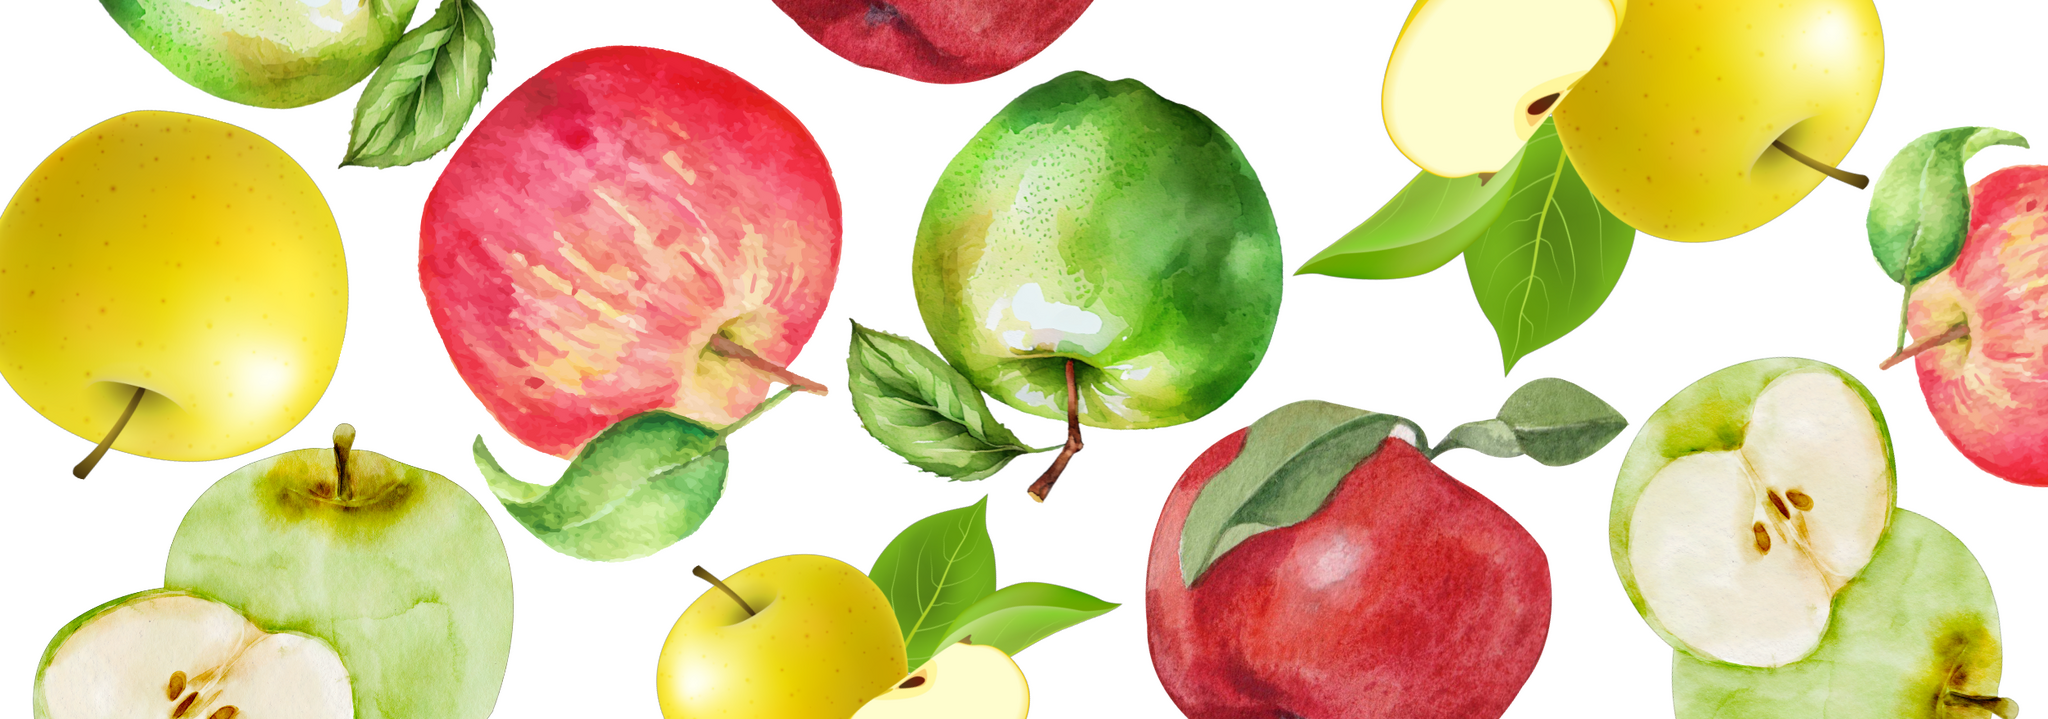 Emaljmugg - Äpplen, stora